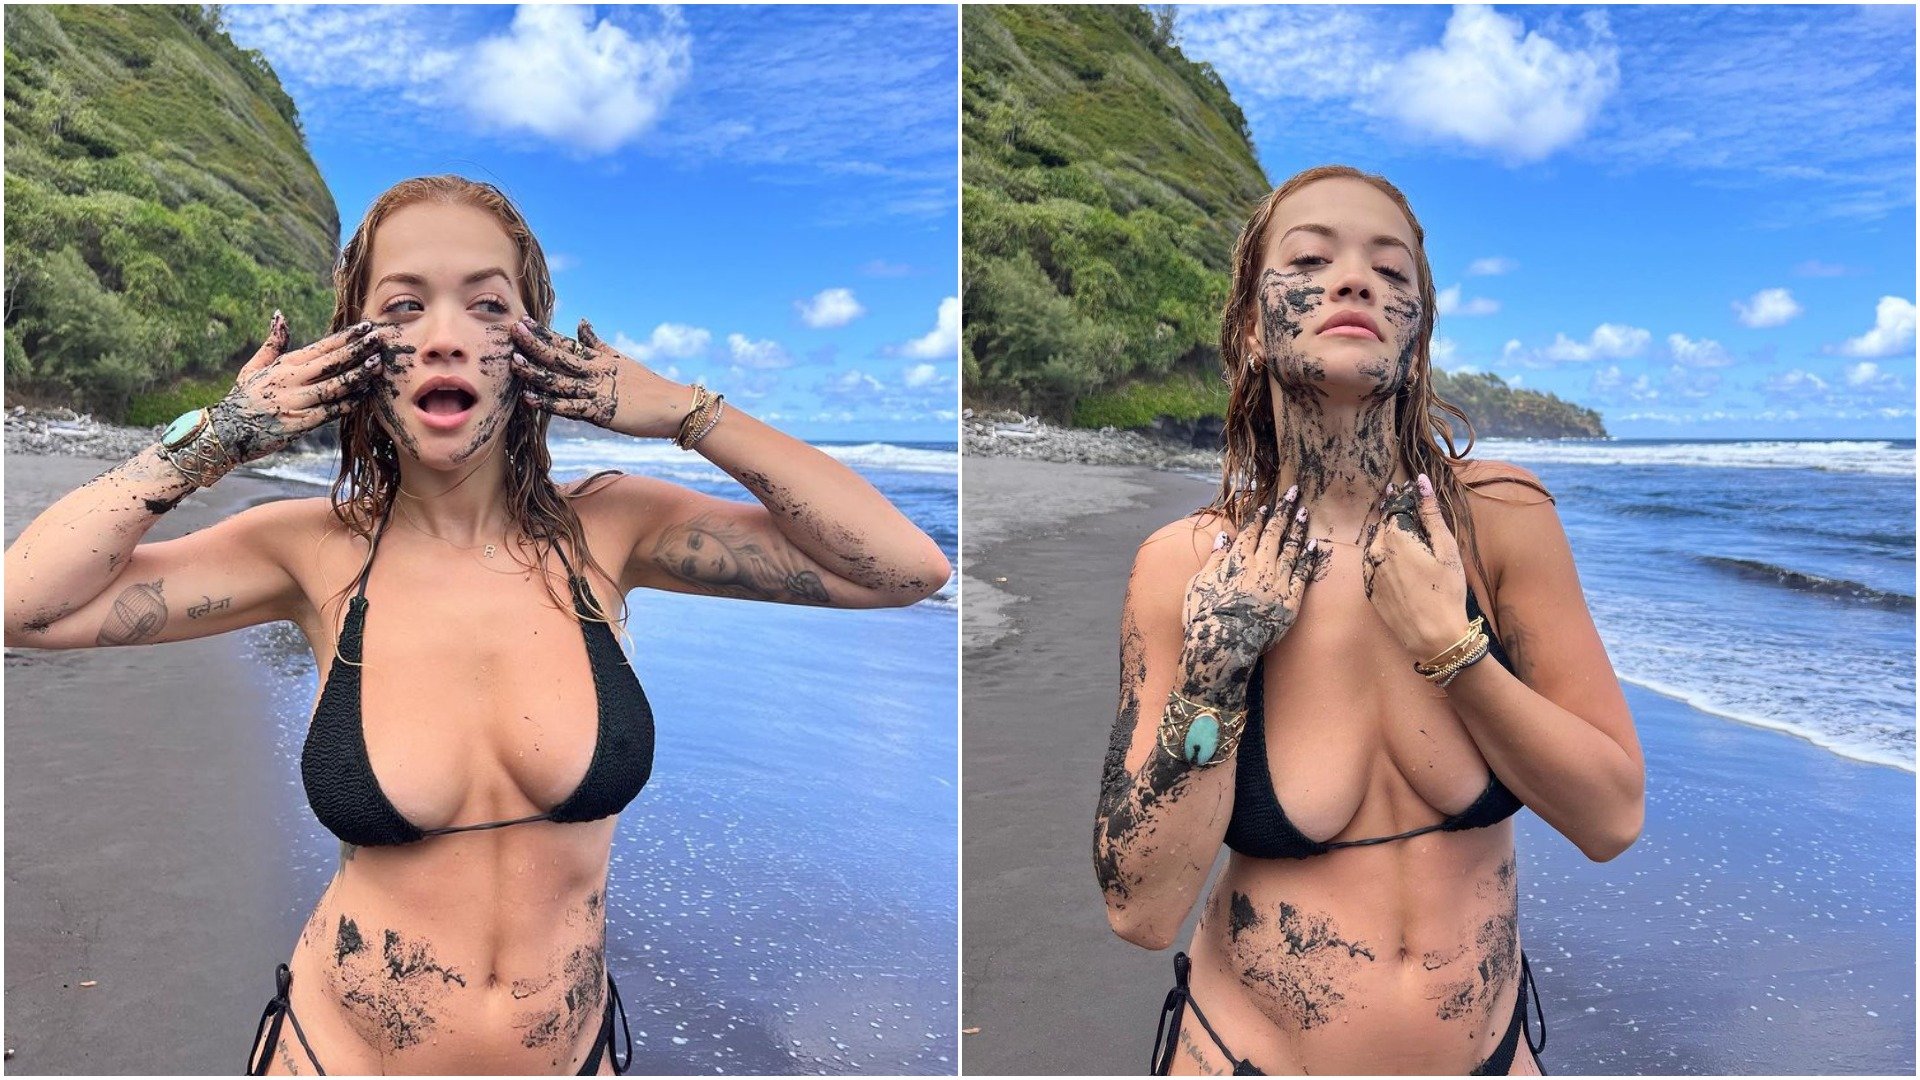 Rita Ora: Τρίβεται με άργιλο στην παραλία φορώντας το μικροσκοπικό μπικίνι της